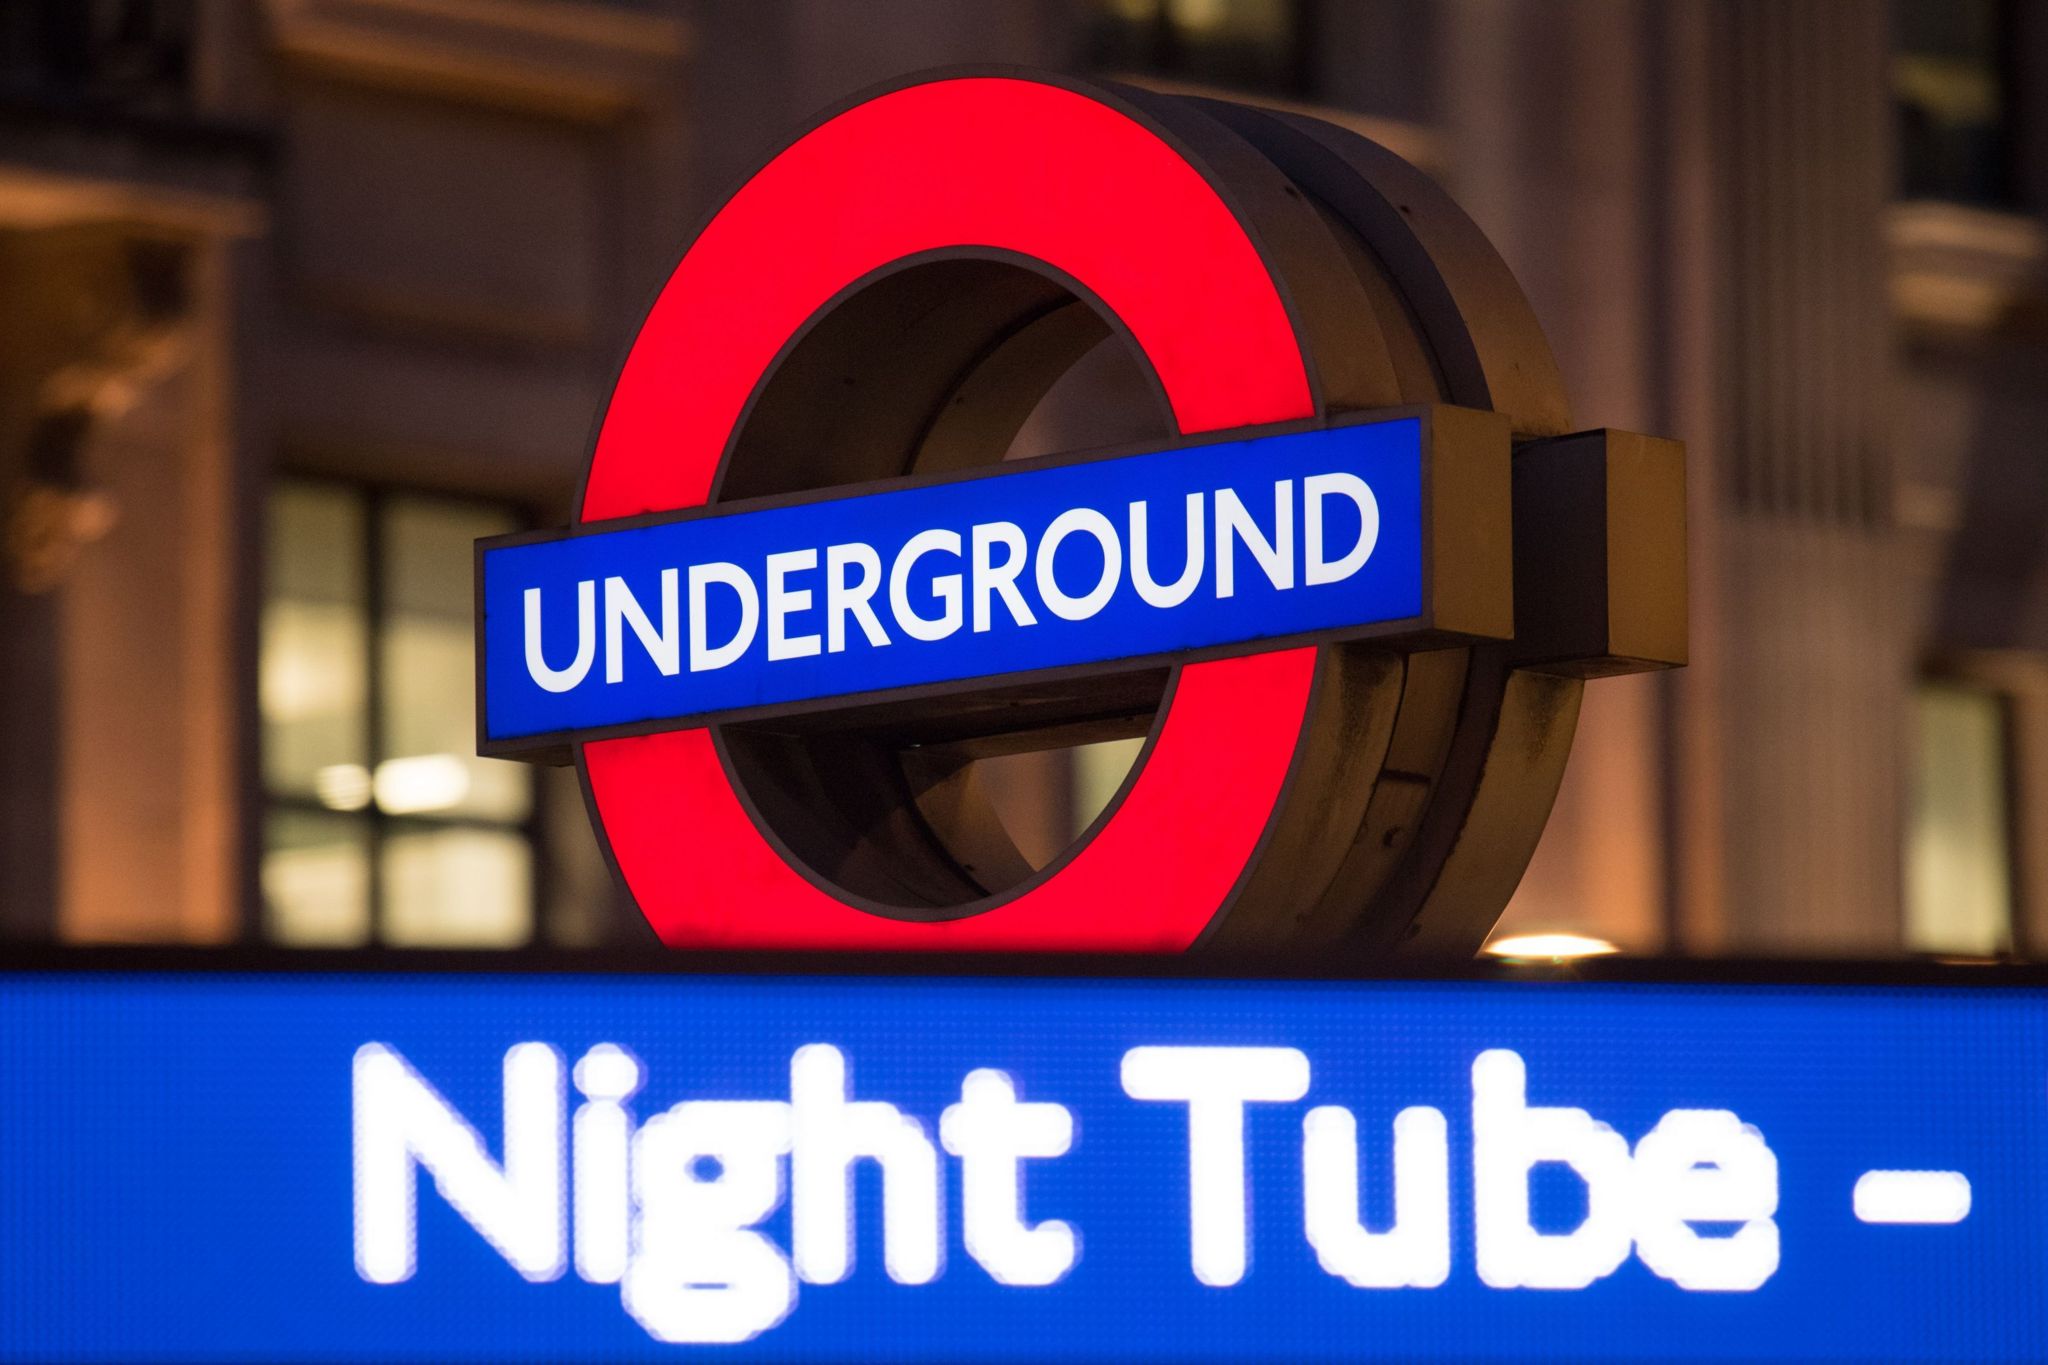 Night Tube sign